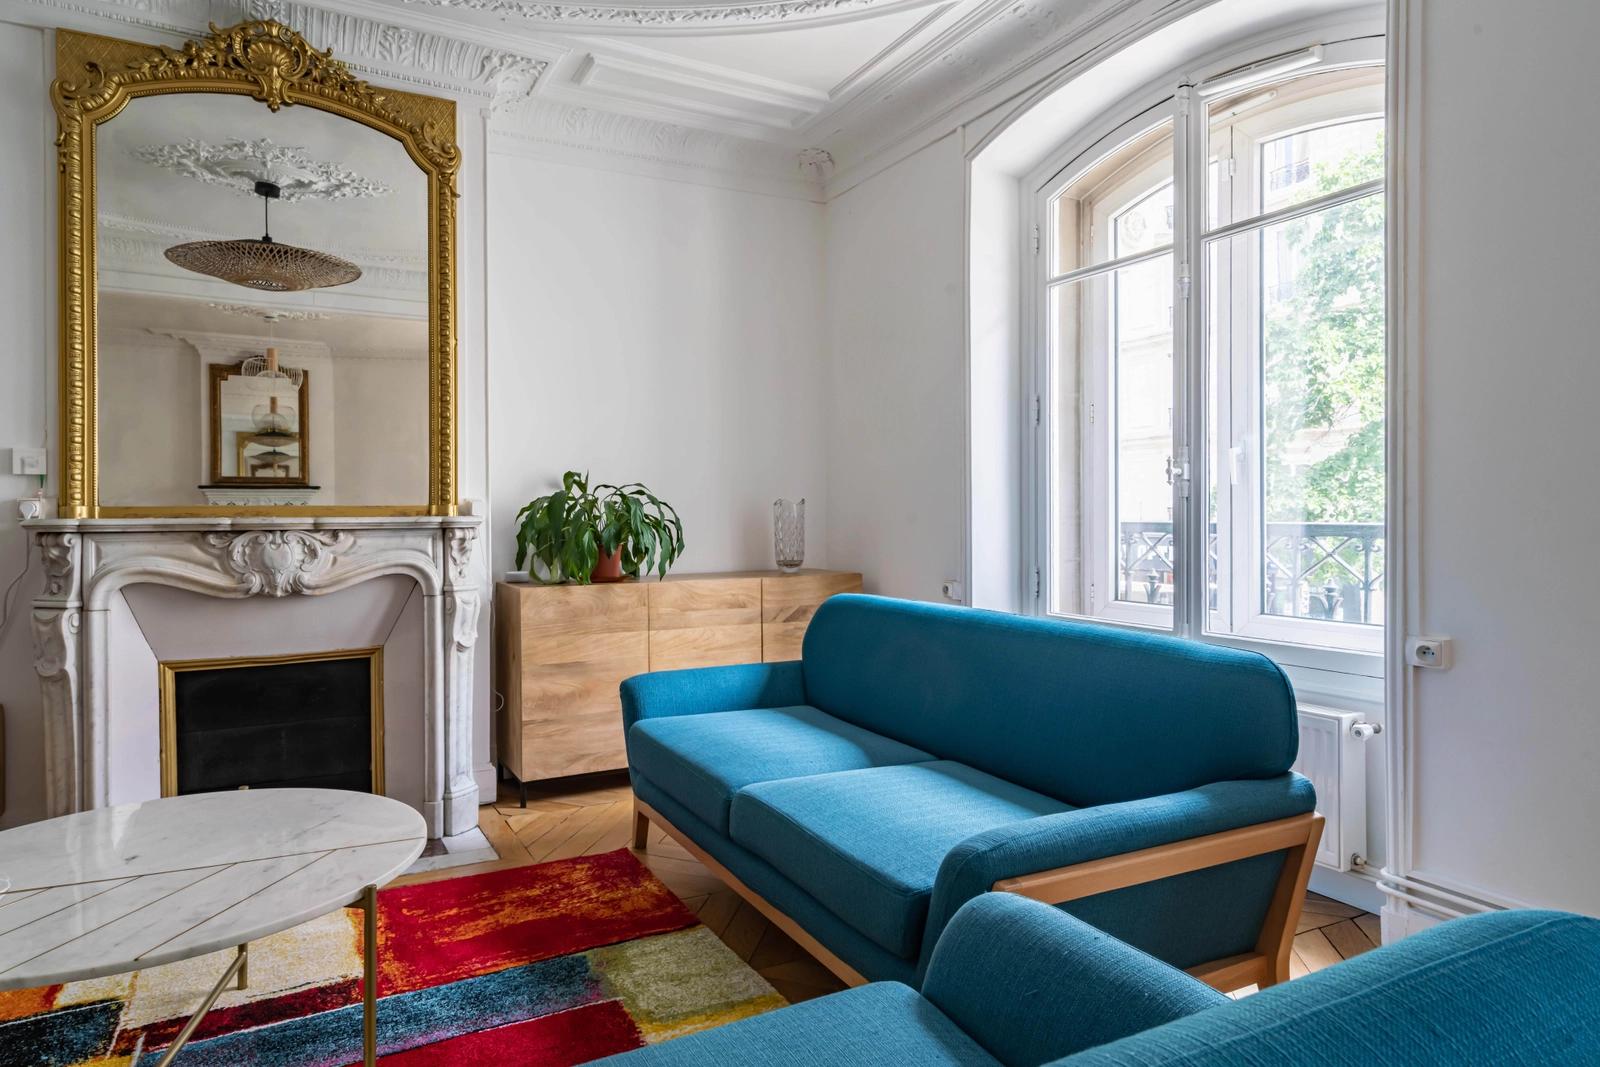 Living room in Beautiful Haussmann apartment - Paris 17th district - 3